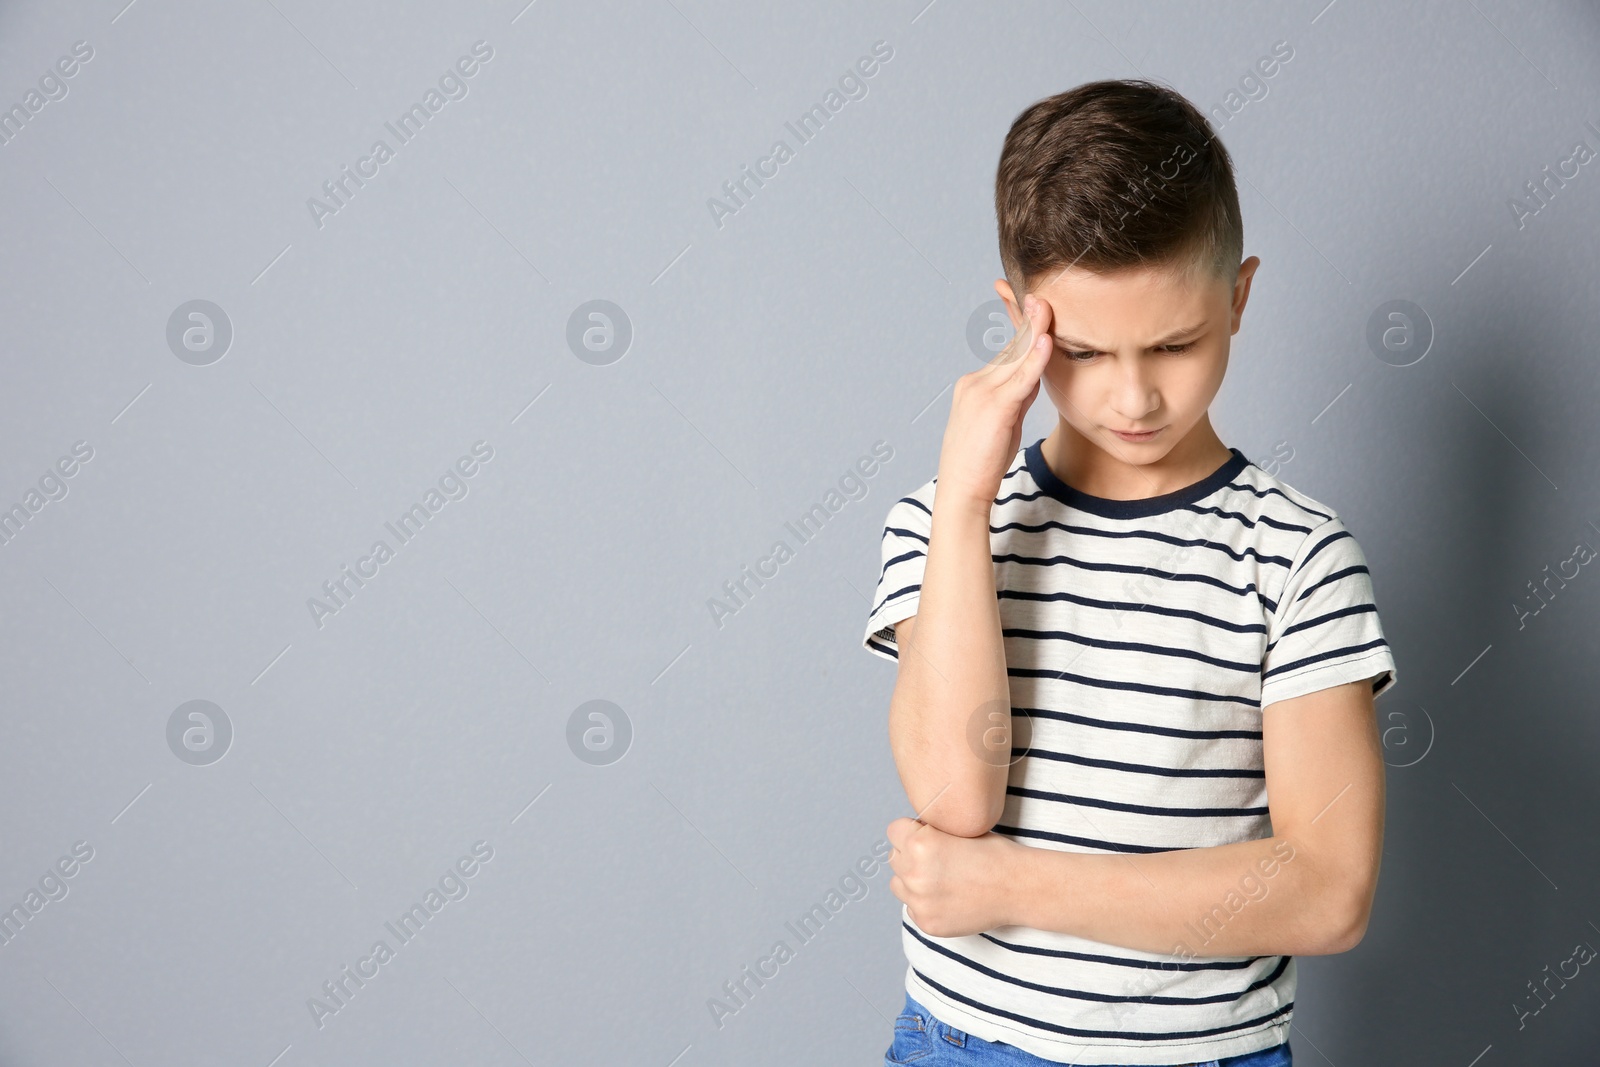 Photo of Little boy suffering from headache on grey background